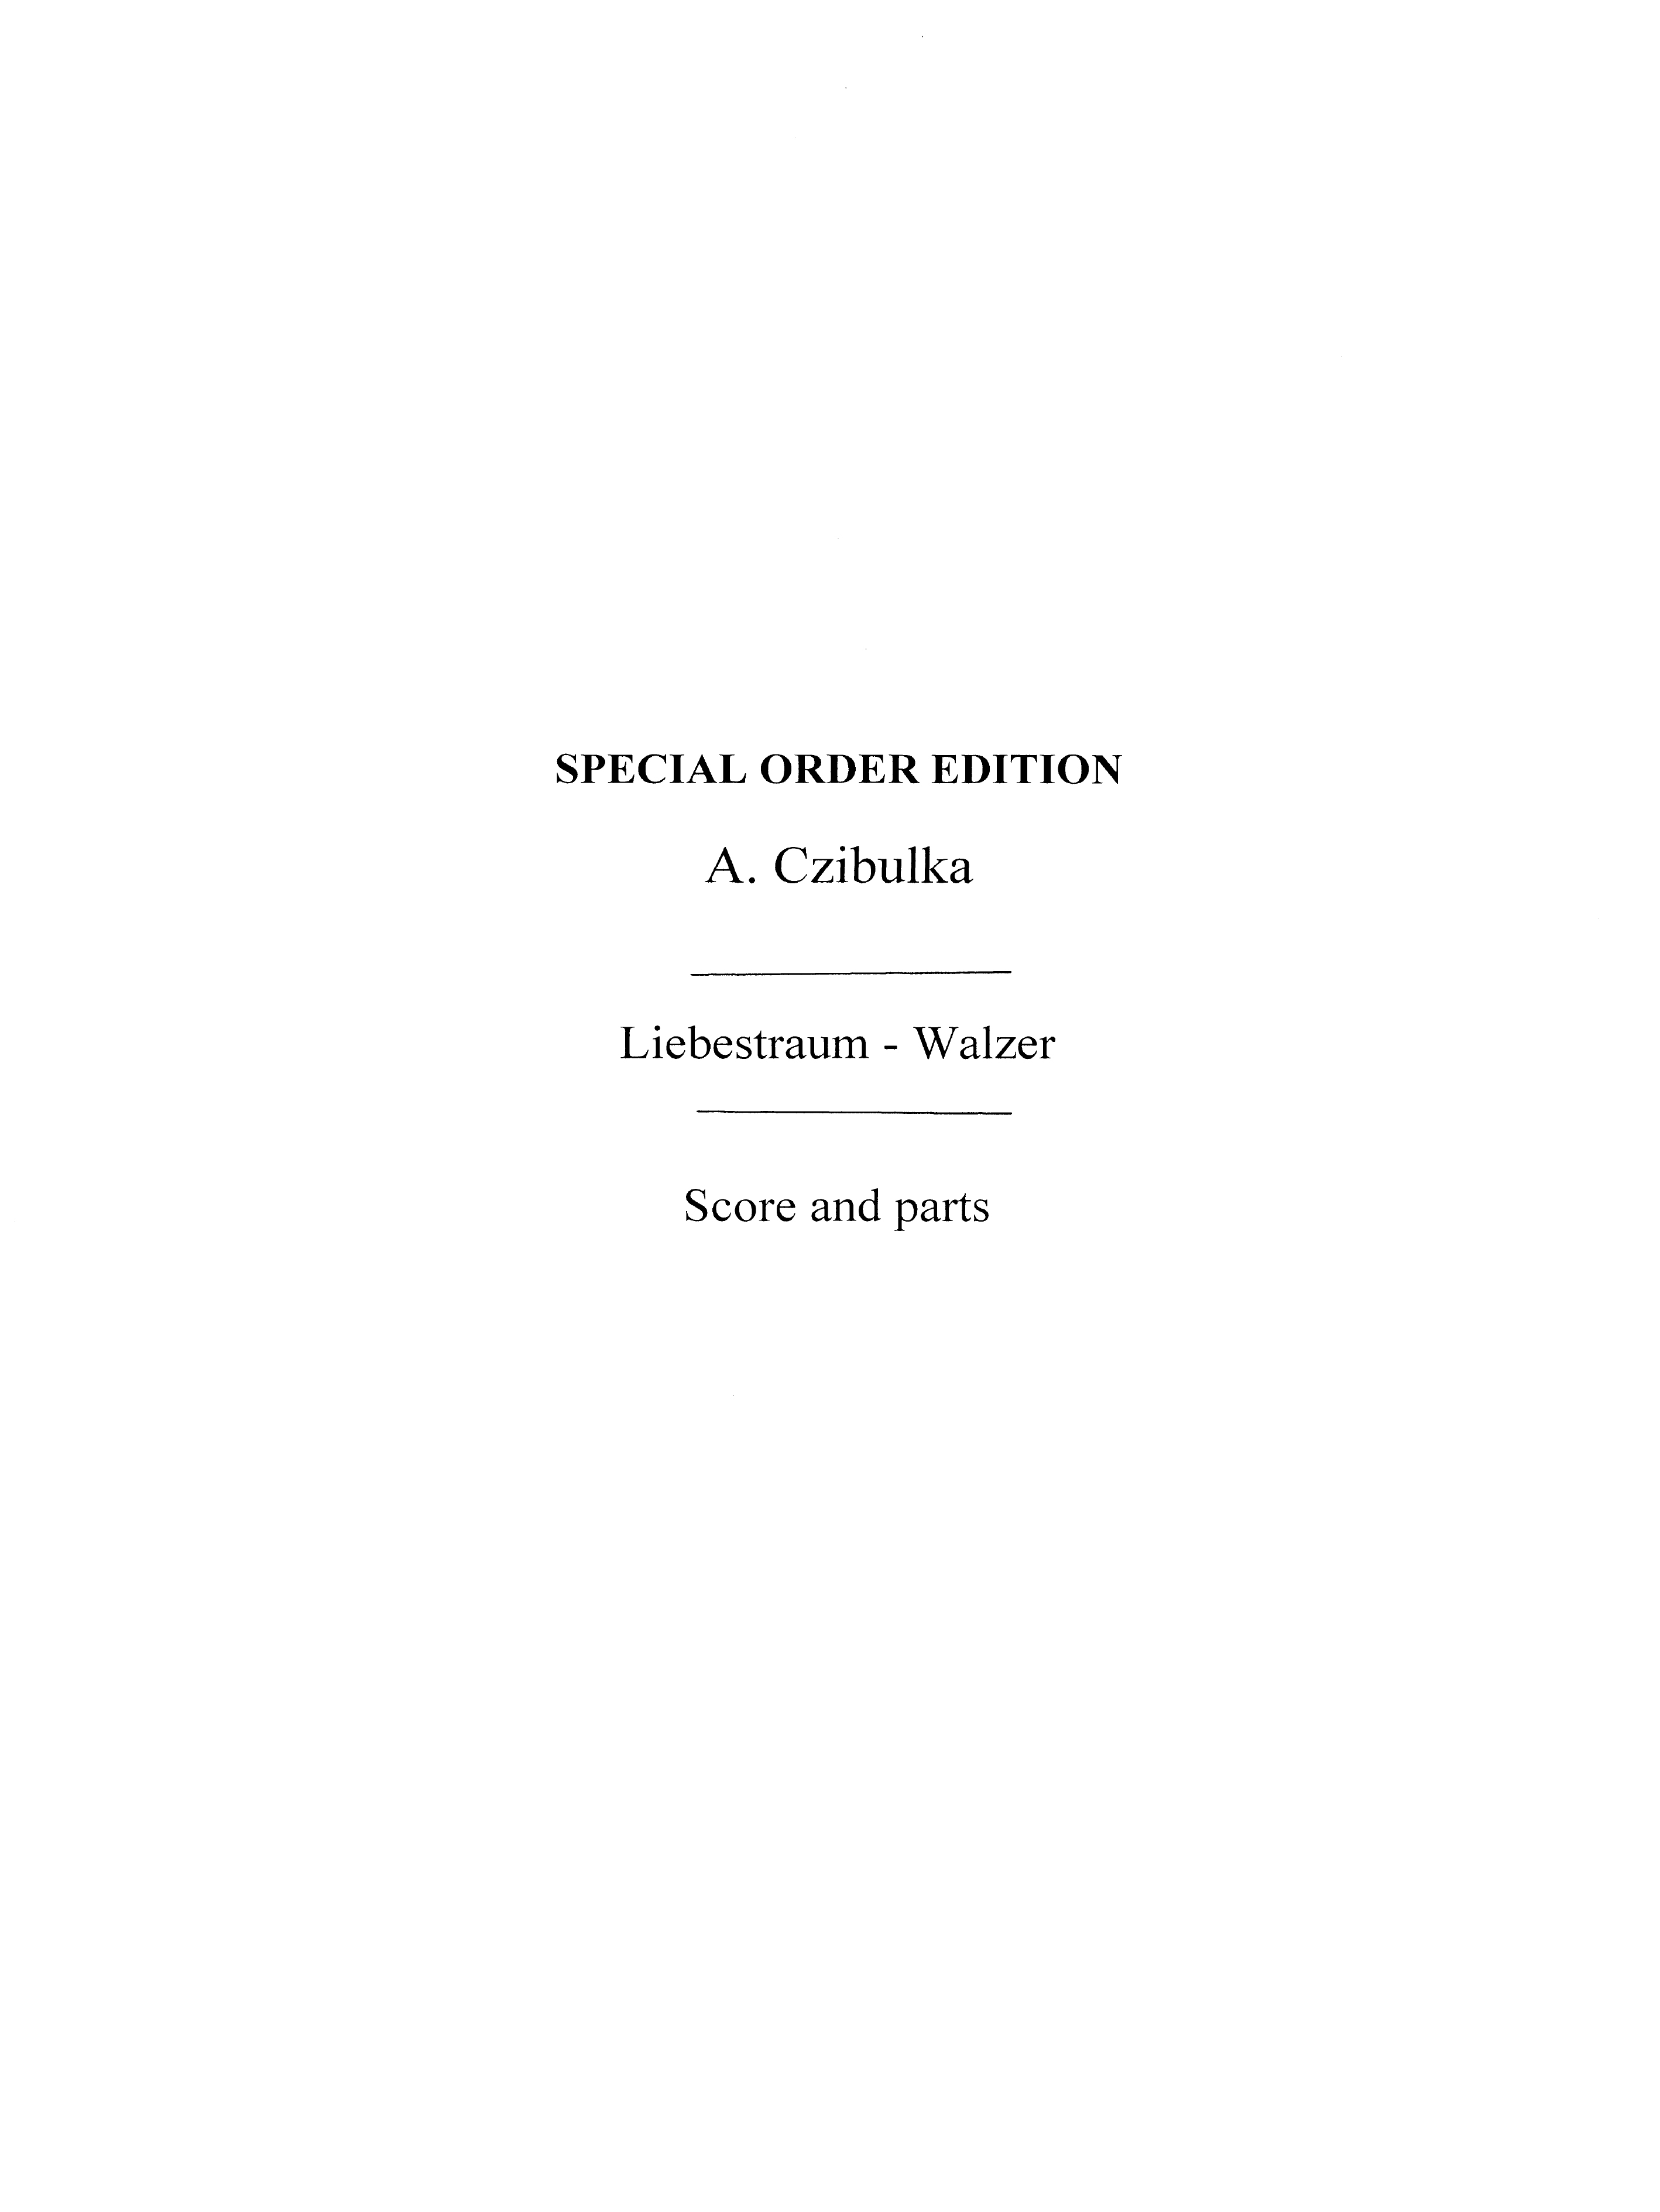 Alphons Czibulka: A Loves Dream Liebestraum Waltz Op.364: Orchestra: Score and